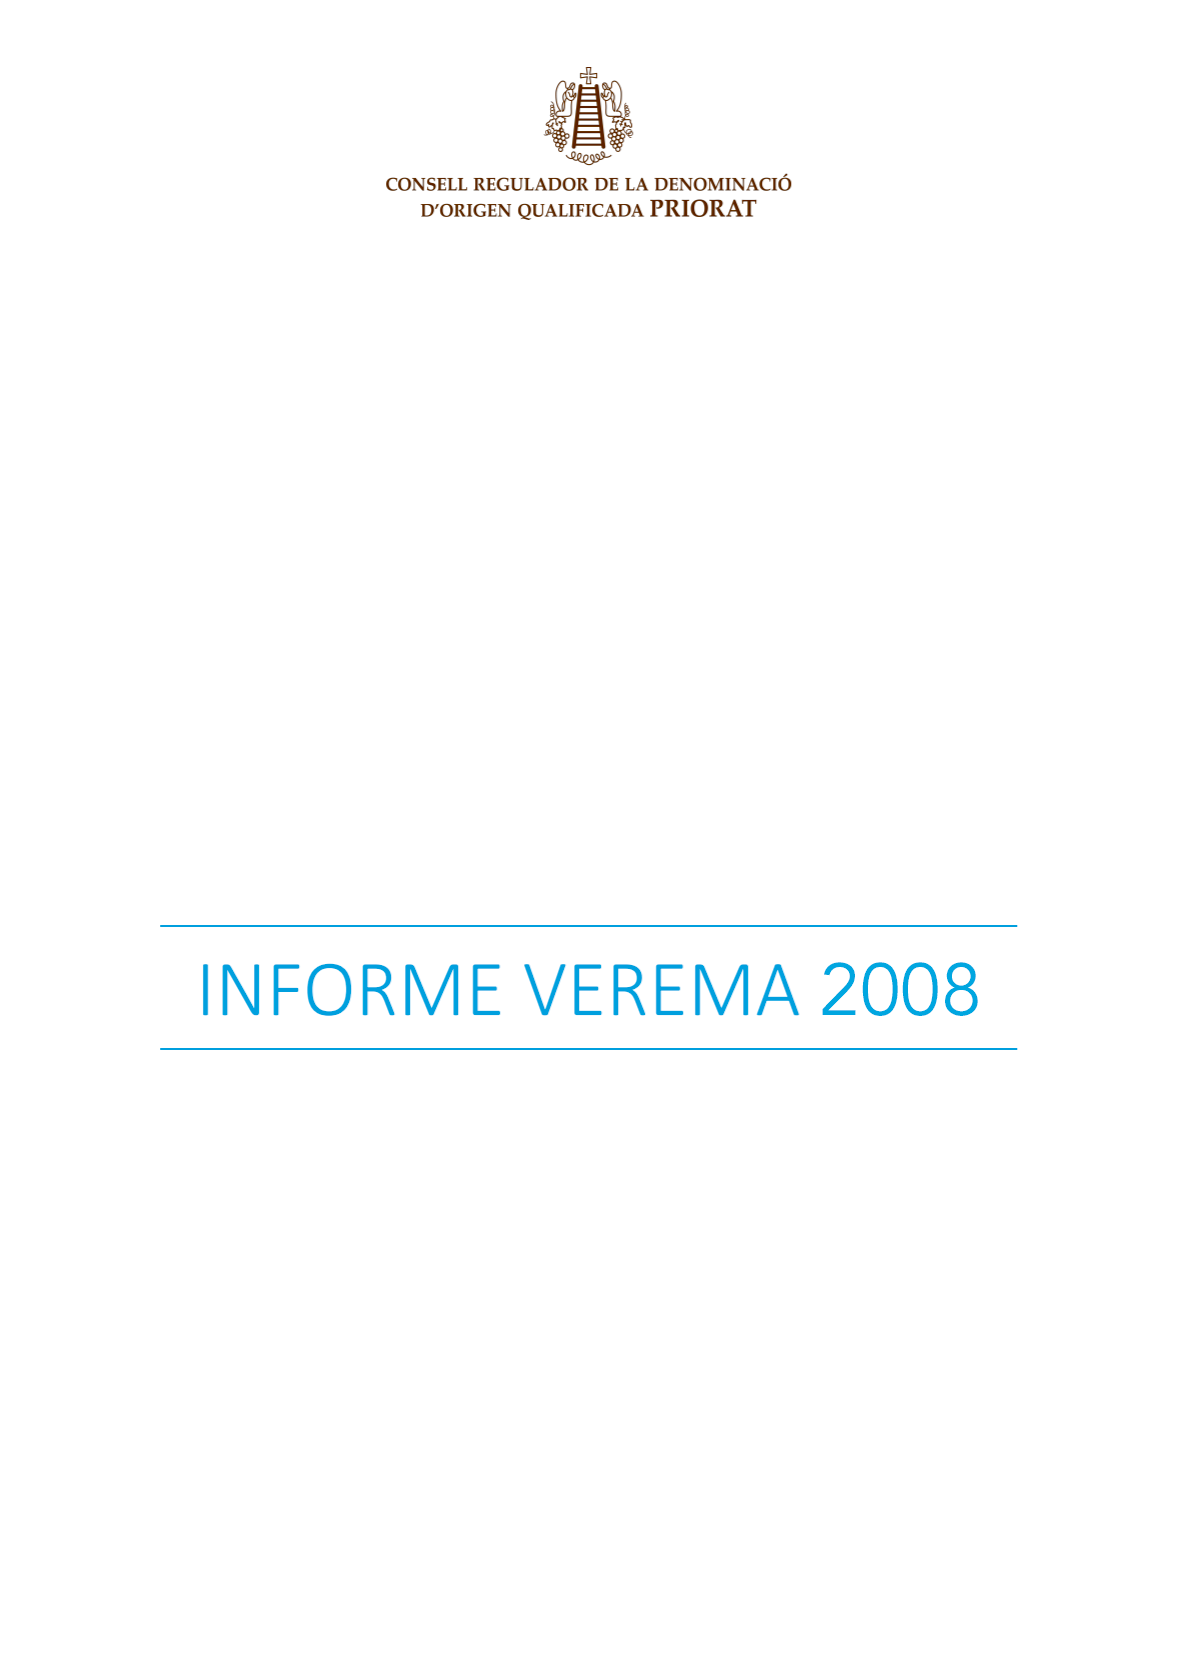 Informe de verema 2008